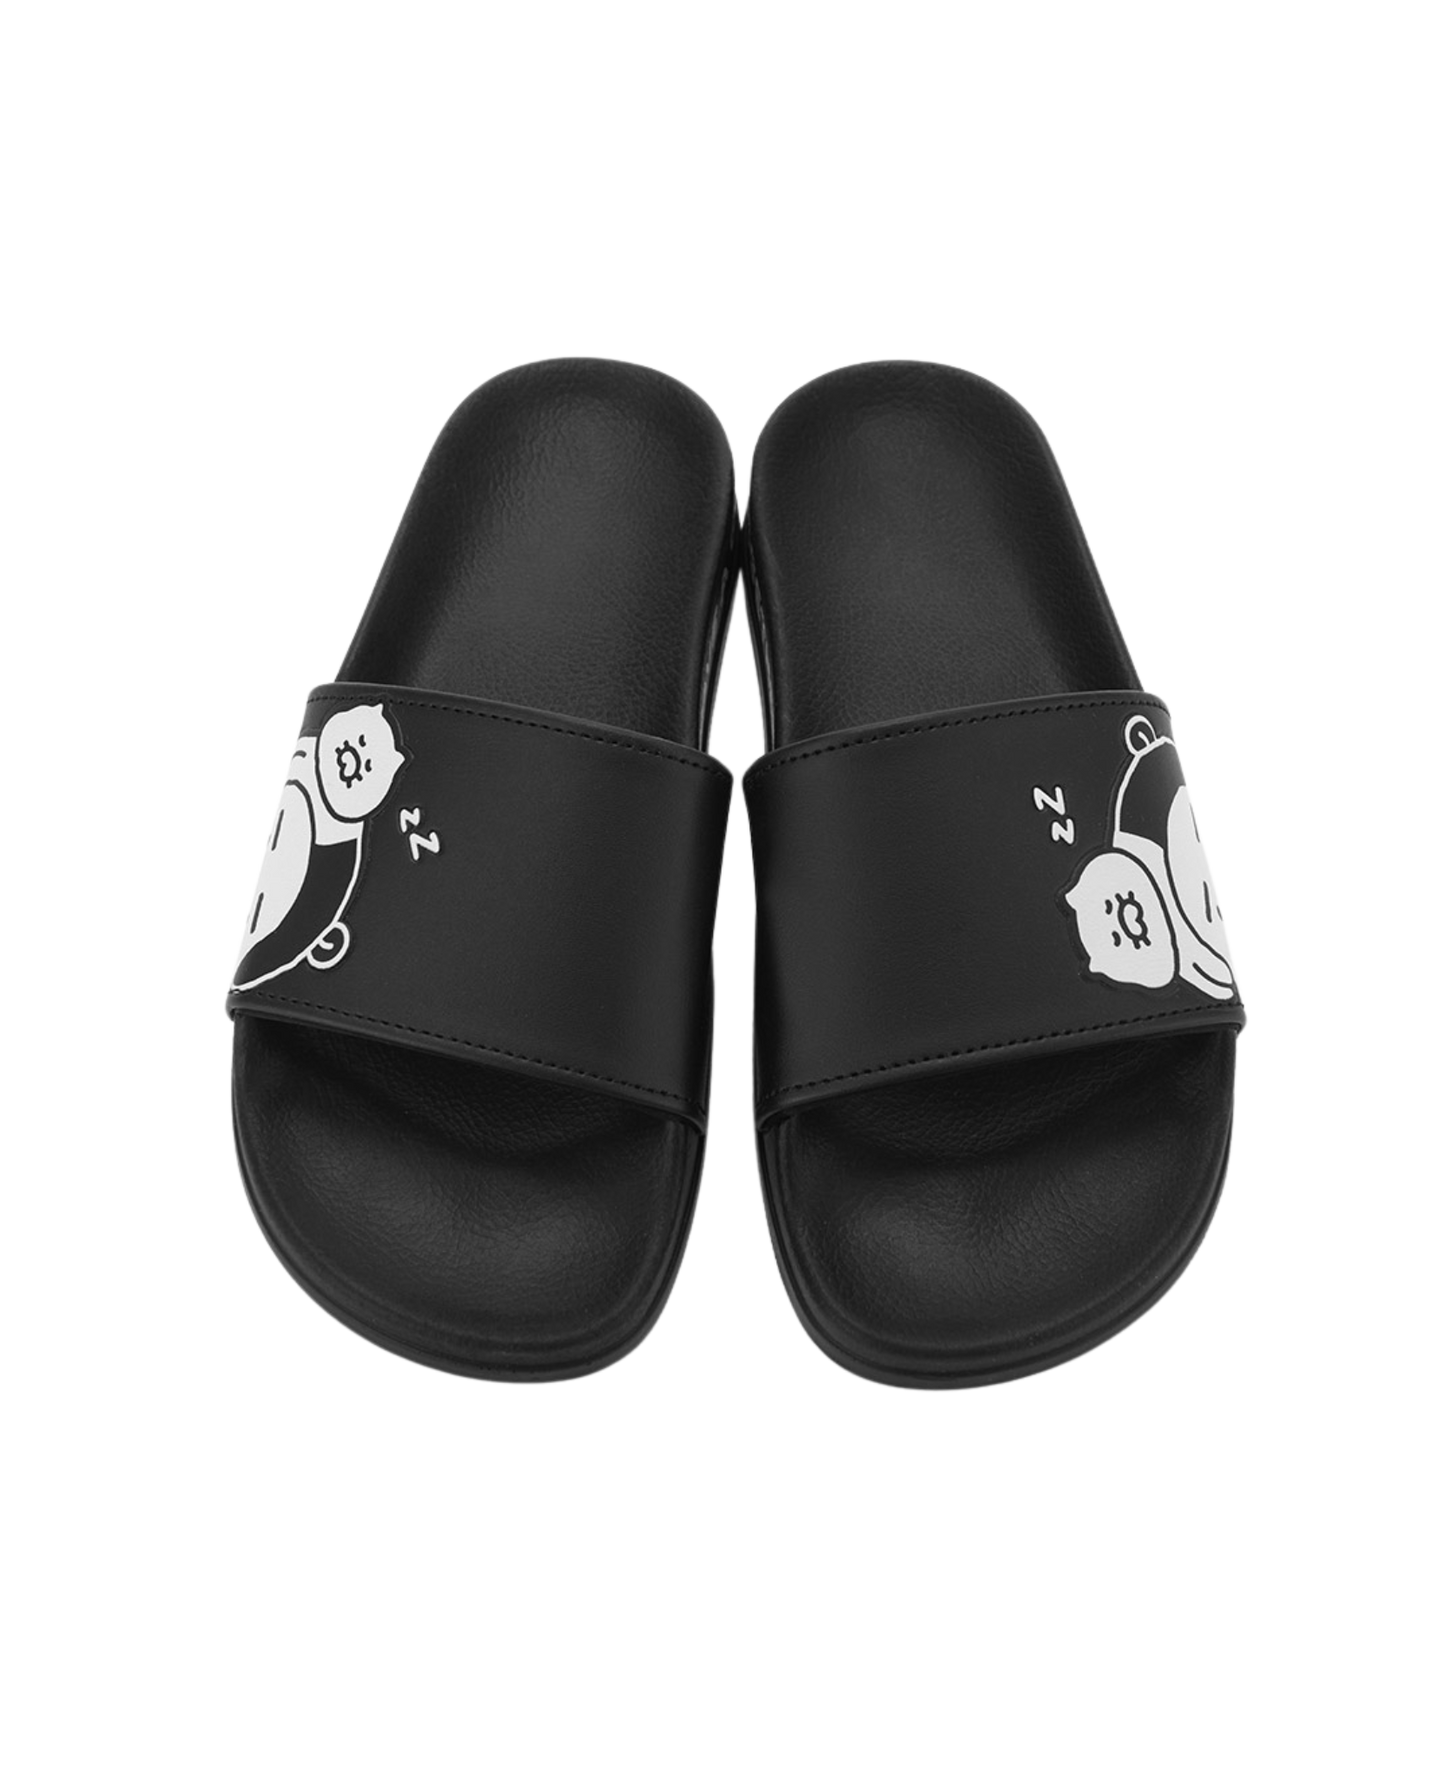 RYAN & CHOONSIK Black & White PU Slippers (Women)